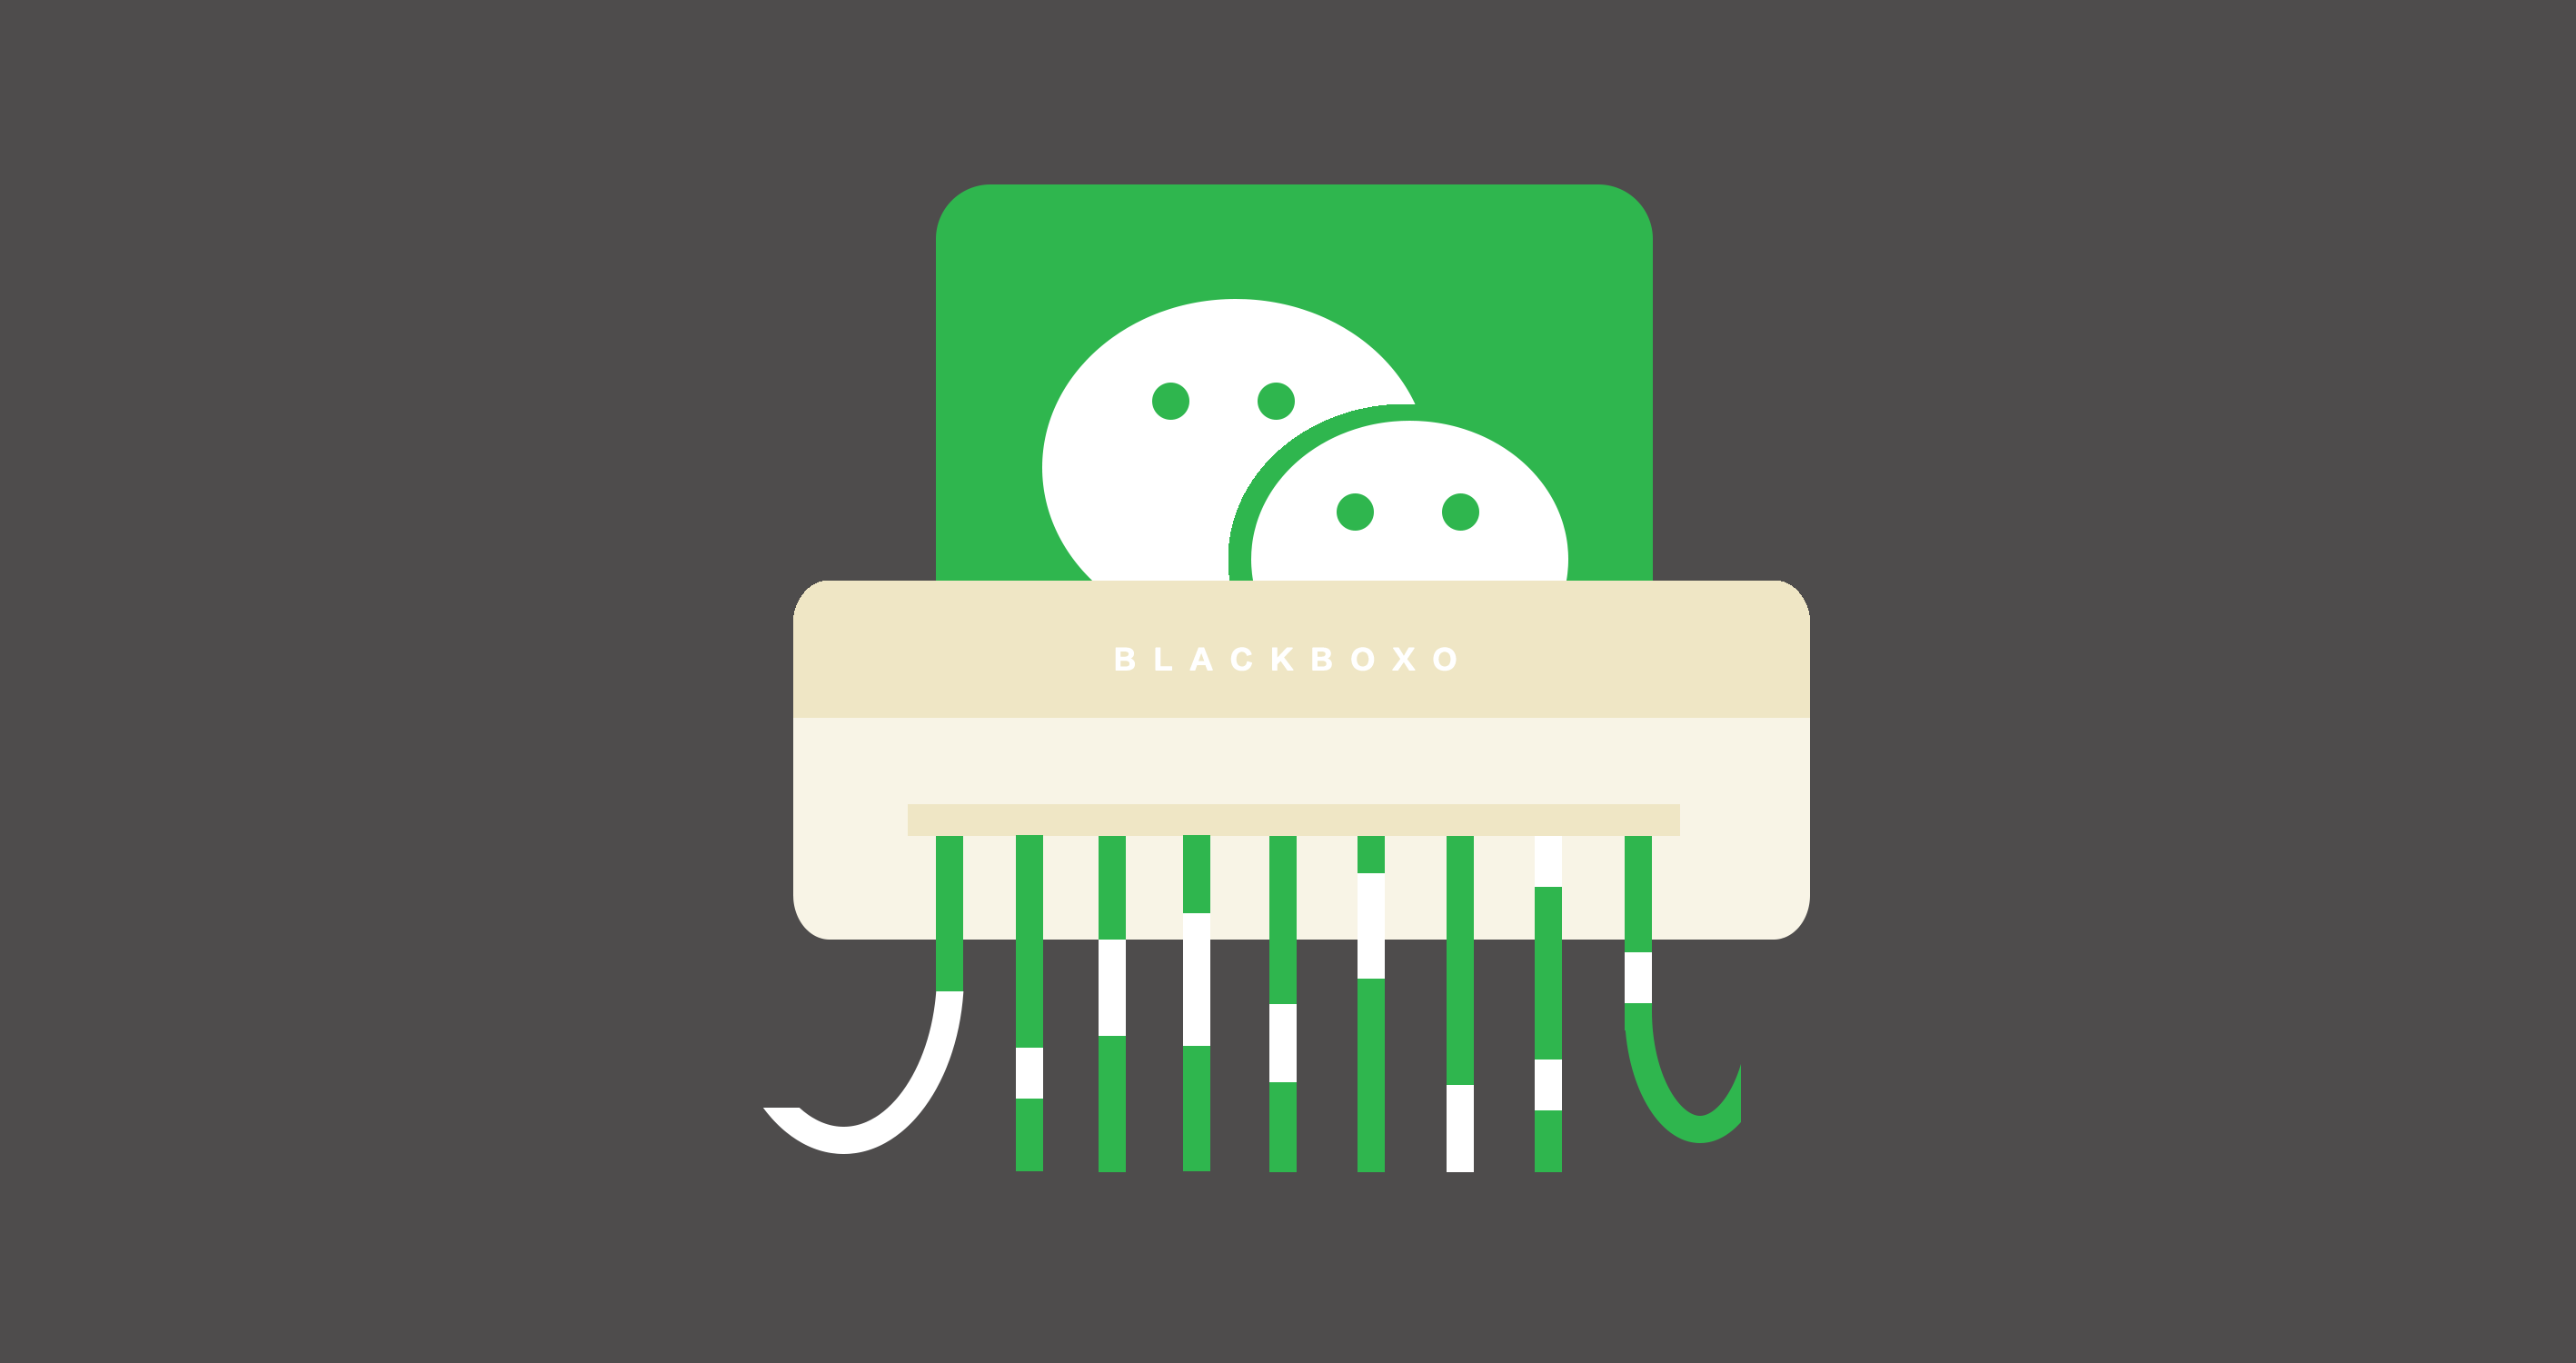 GitHub - blackboxo/CleanMyWechat: 自动删除PC 端微信缓存数据，包括从所有聊天中自动下载的大量文件、视频、图片等数据内容，解放你的空间。